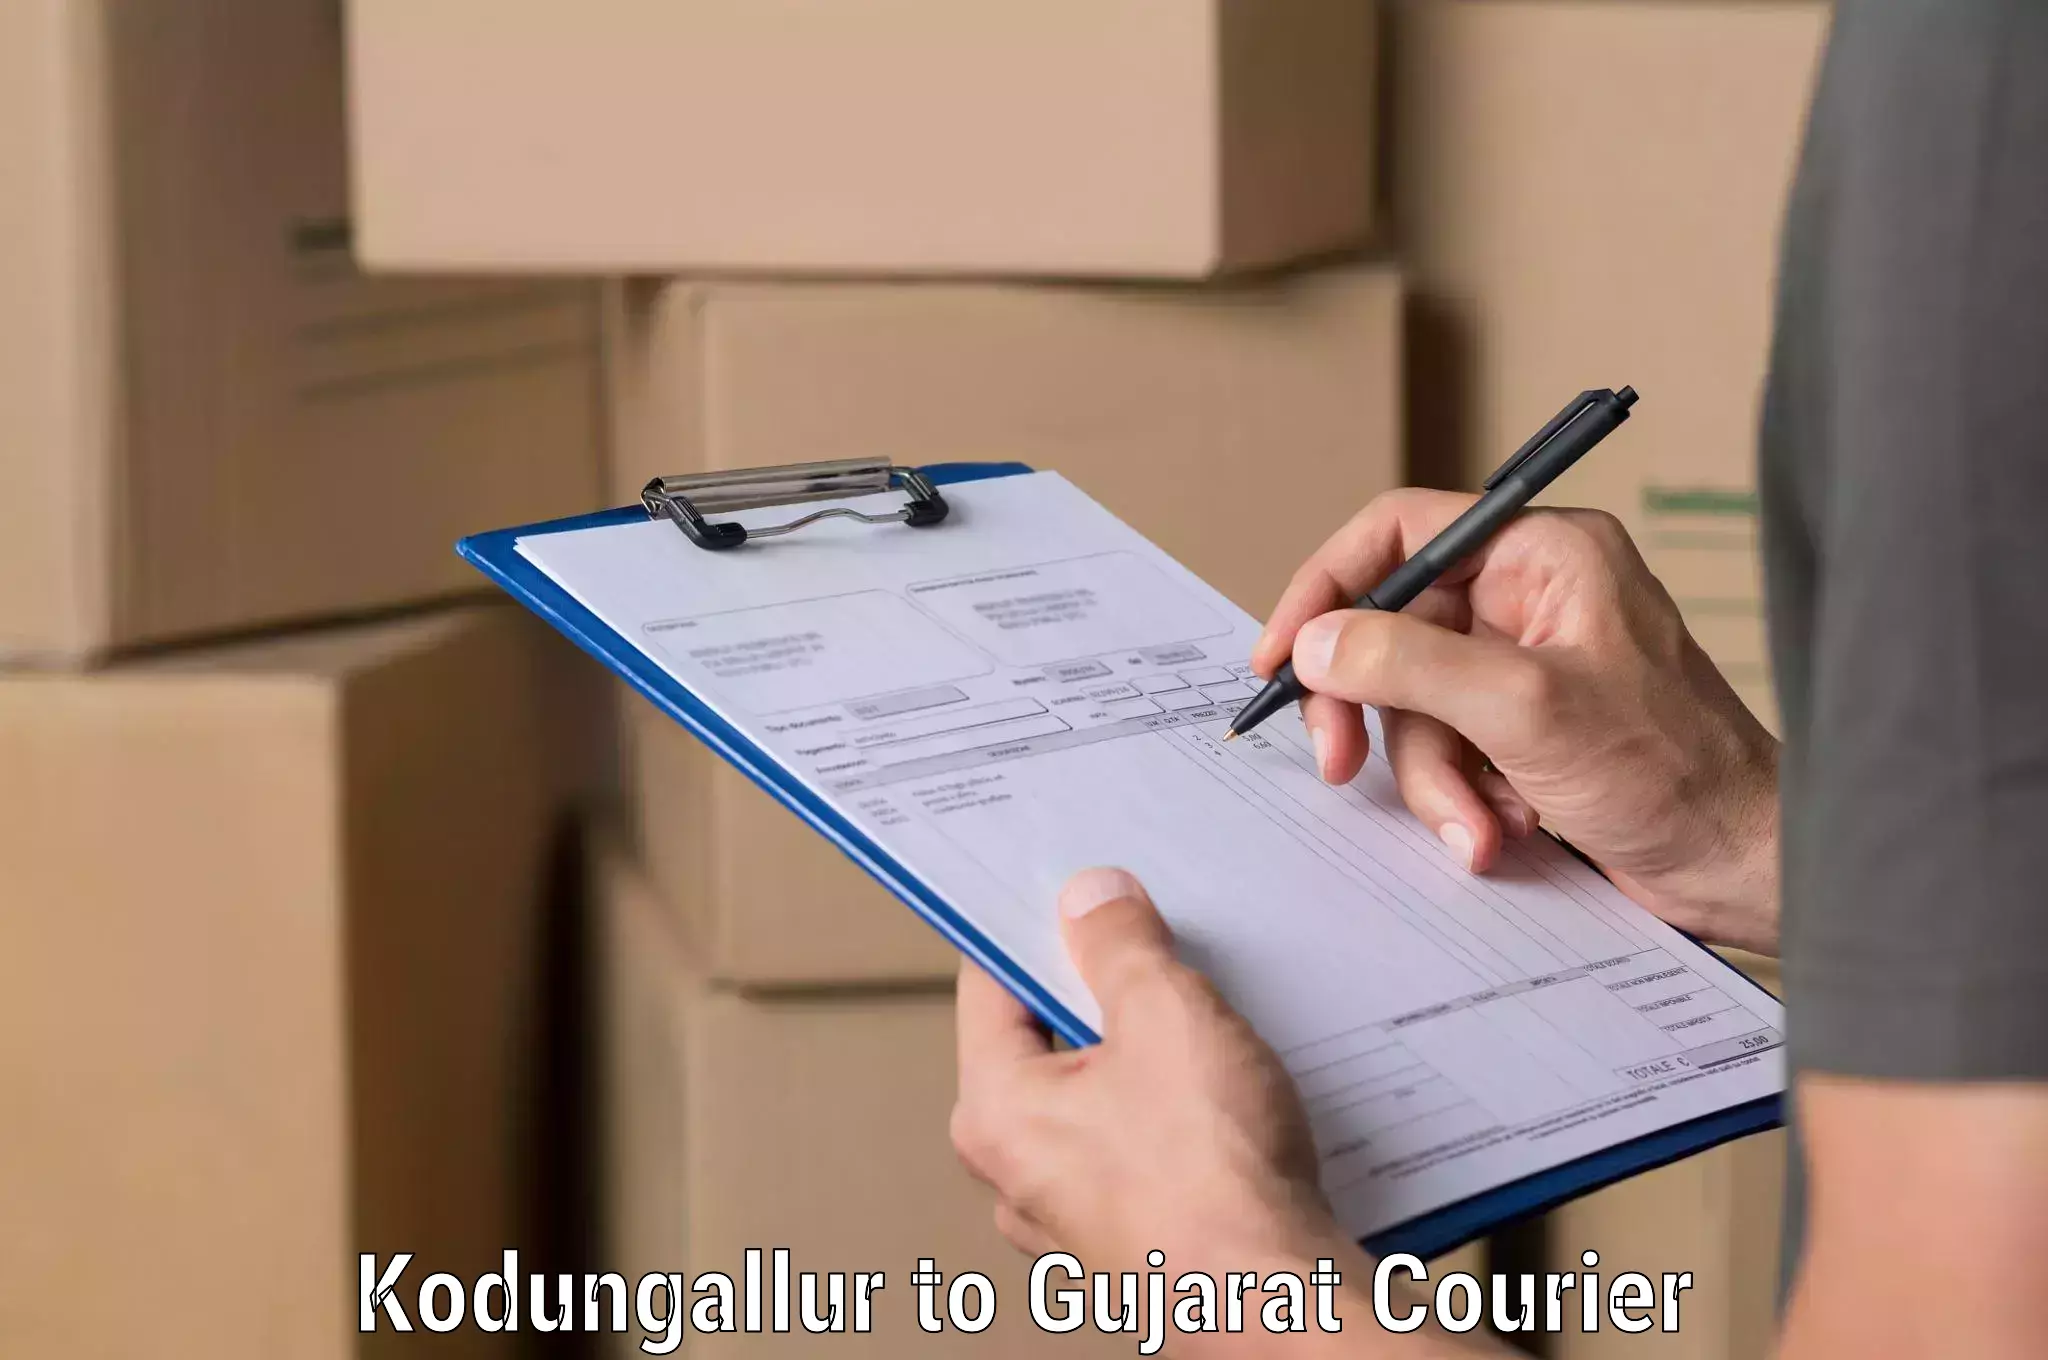 Efficient order fulfillment Kodungallur to Gujarat